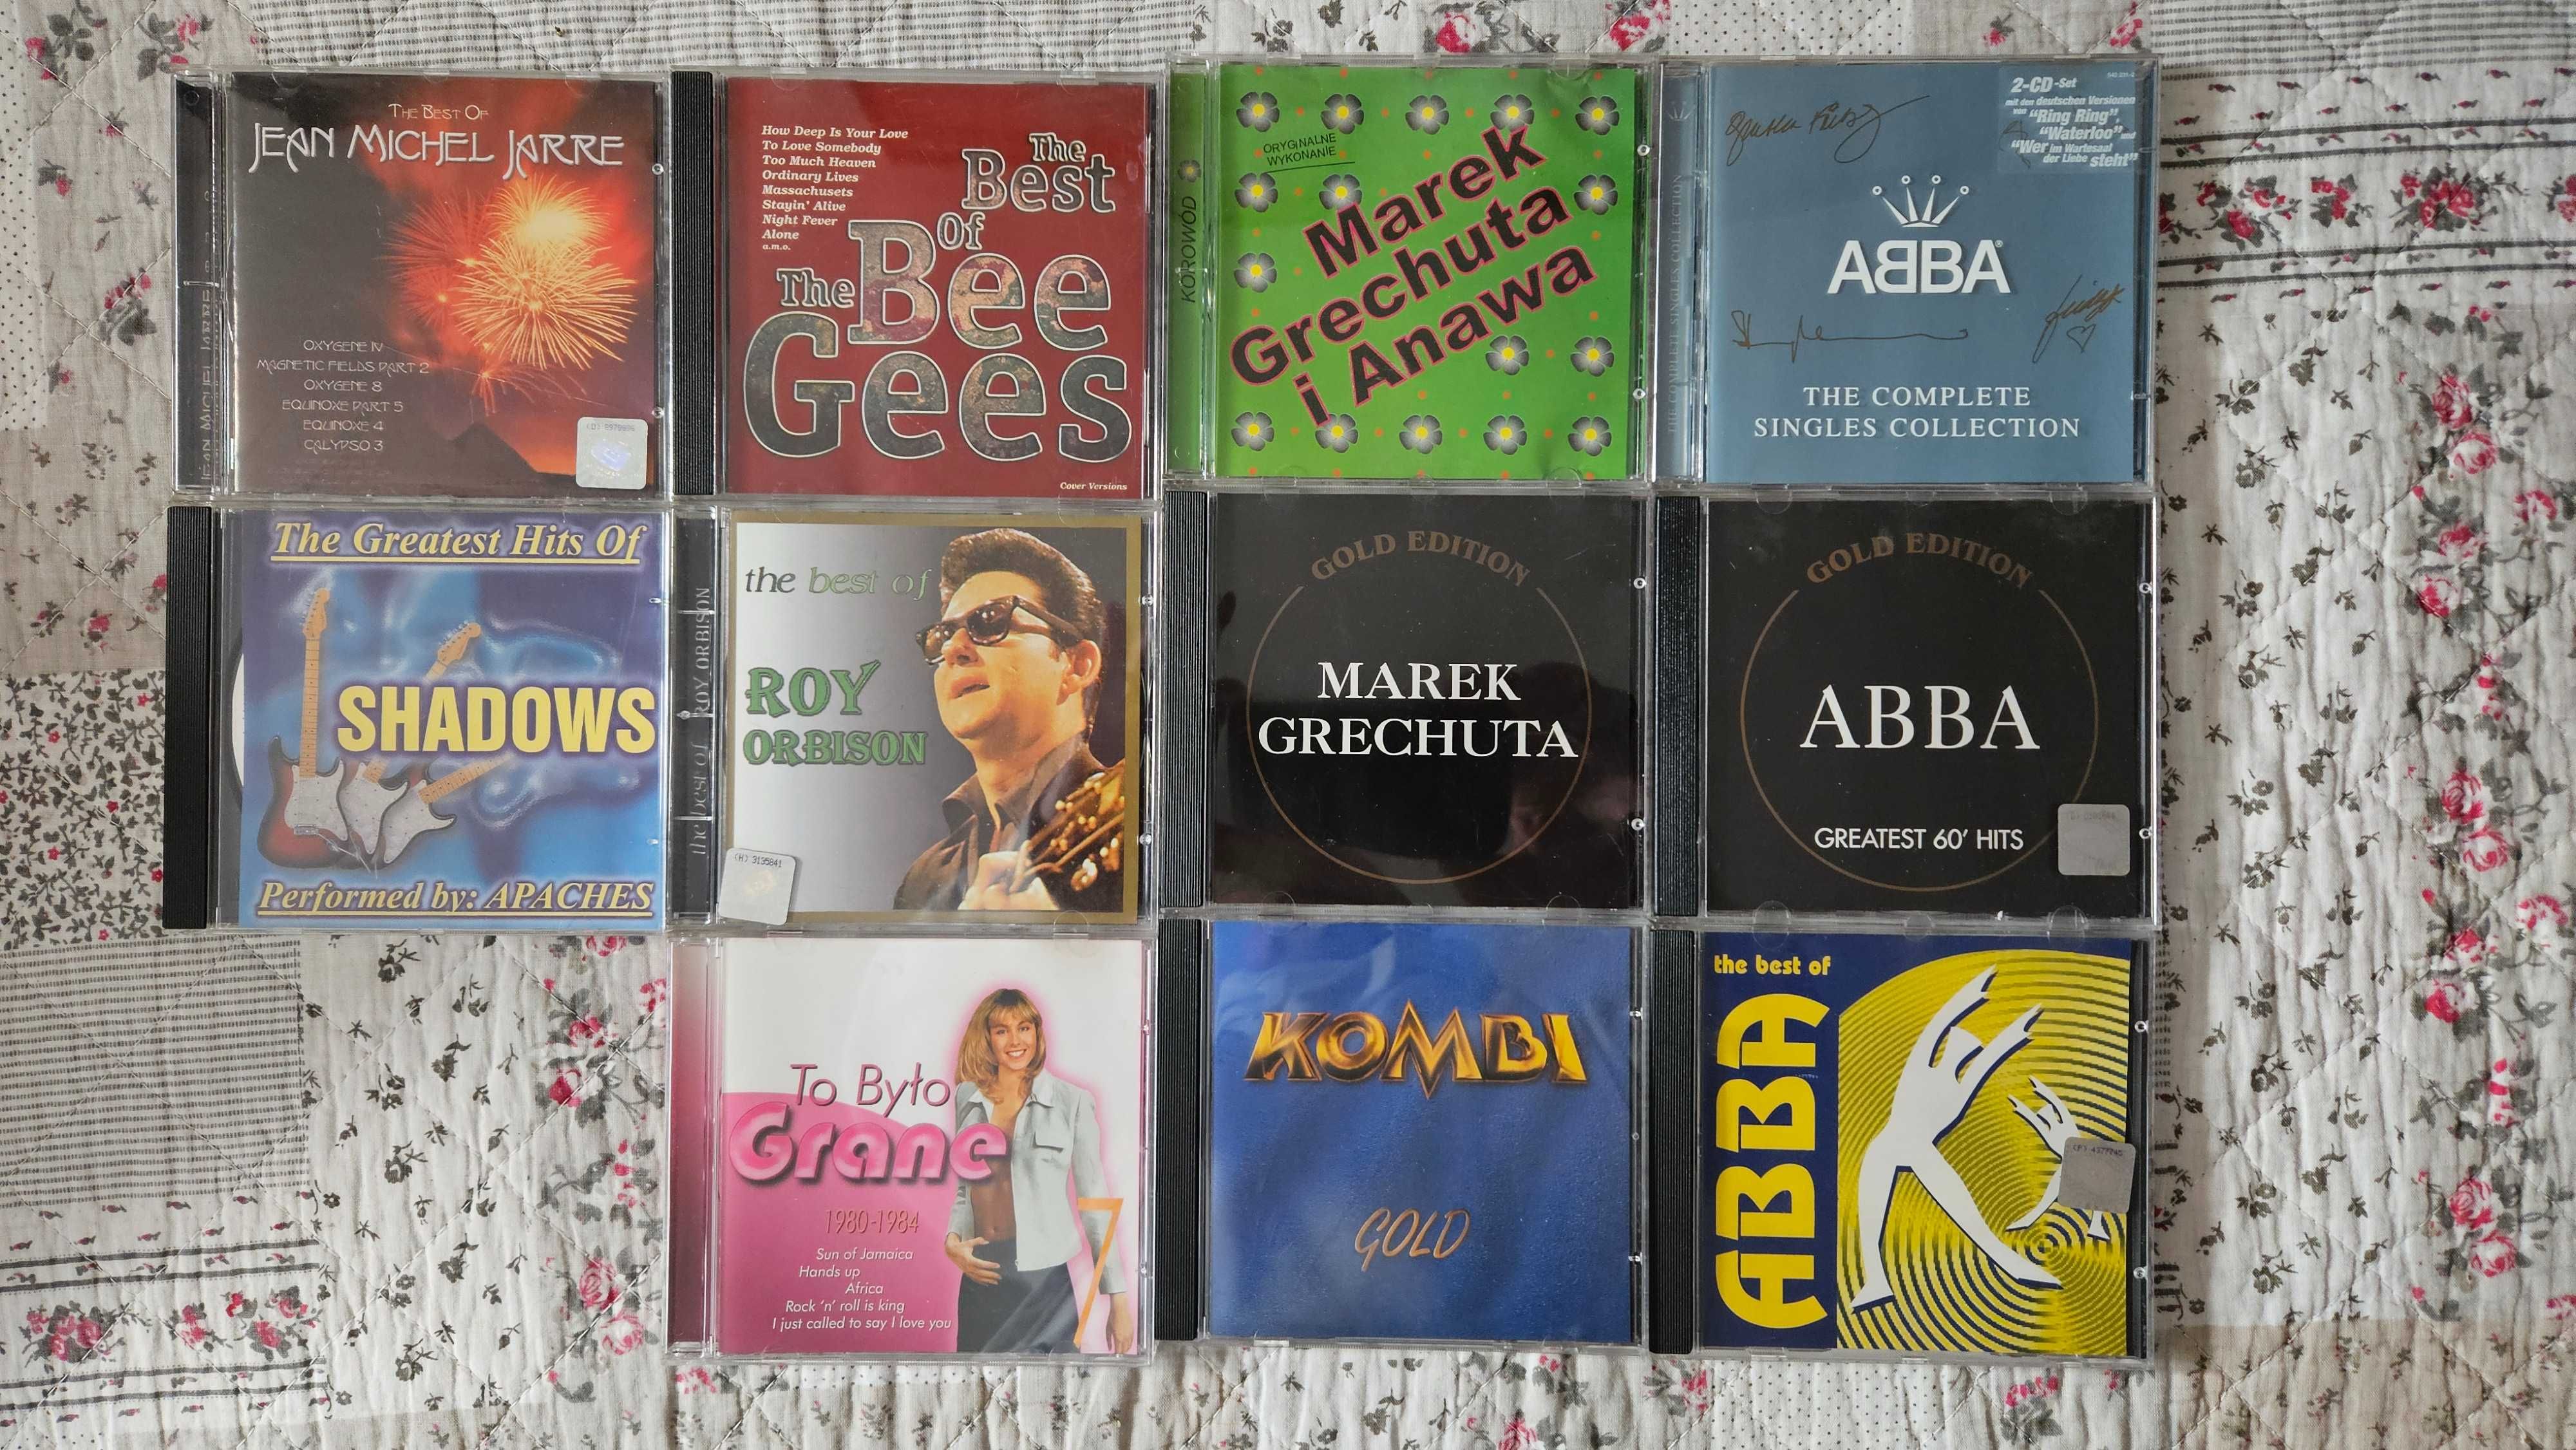 Płyty CD + ABBA The Complete Singles Collection wydanie niemieckie